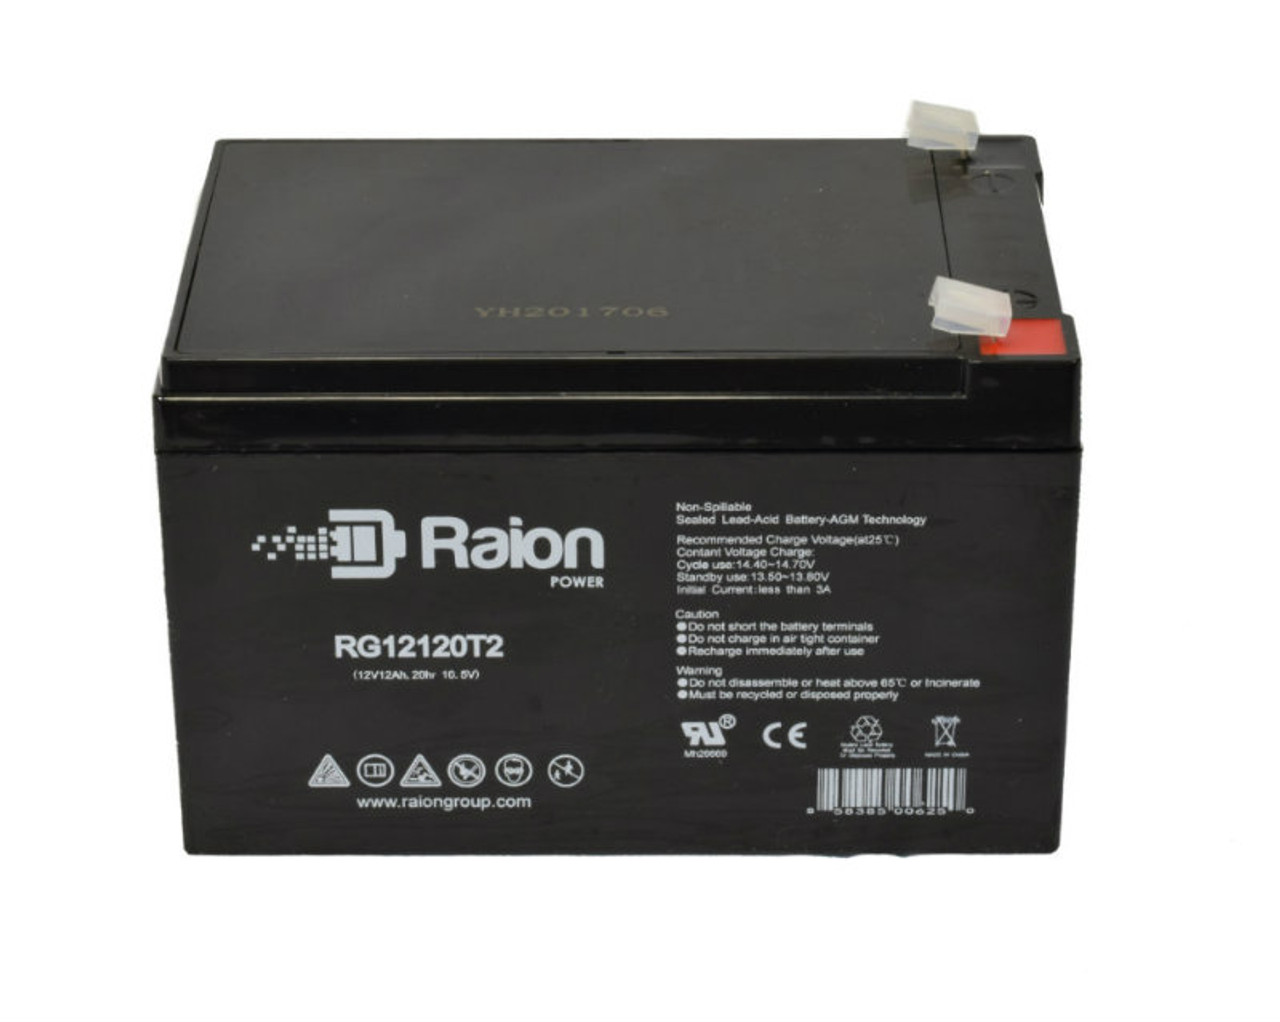 Raion Power RG12120T2 SLA Battery for Sealed Lead Acid 12 Volt 12 Amp HR